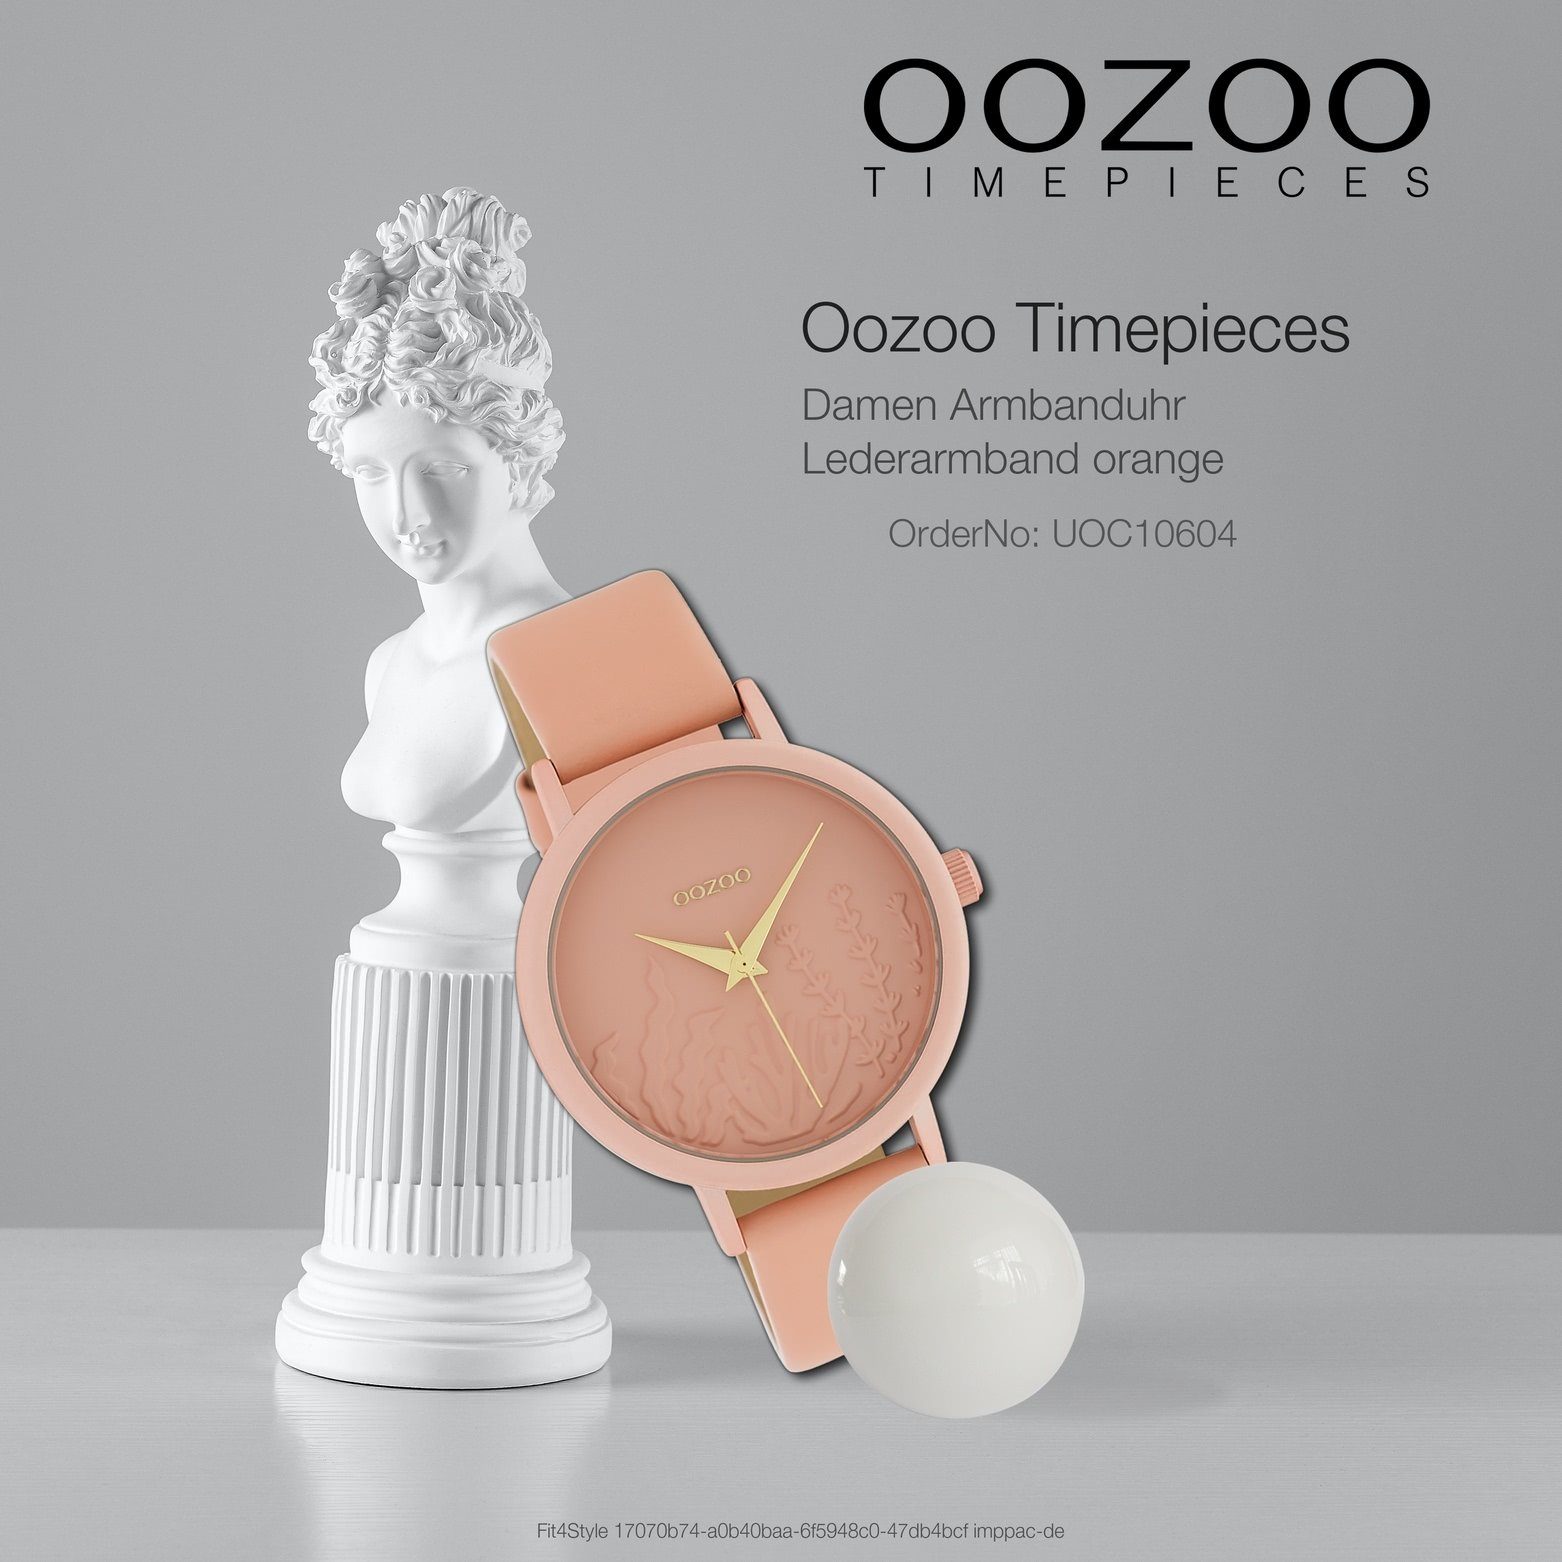 Fashion-Style 36mm) Oozoo rund, OOZOO Damenuhr Armbanduhr (ca. Lederarmband, Damen mittel orange Quarzuhr Analog,